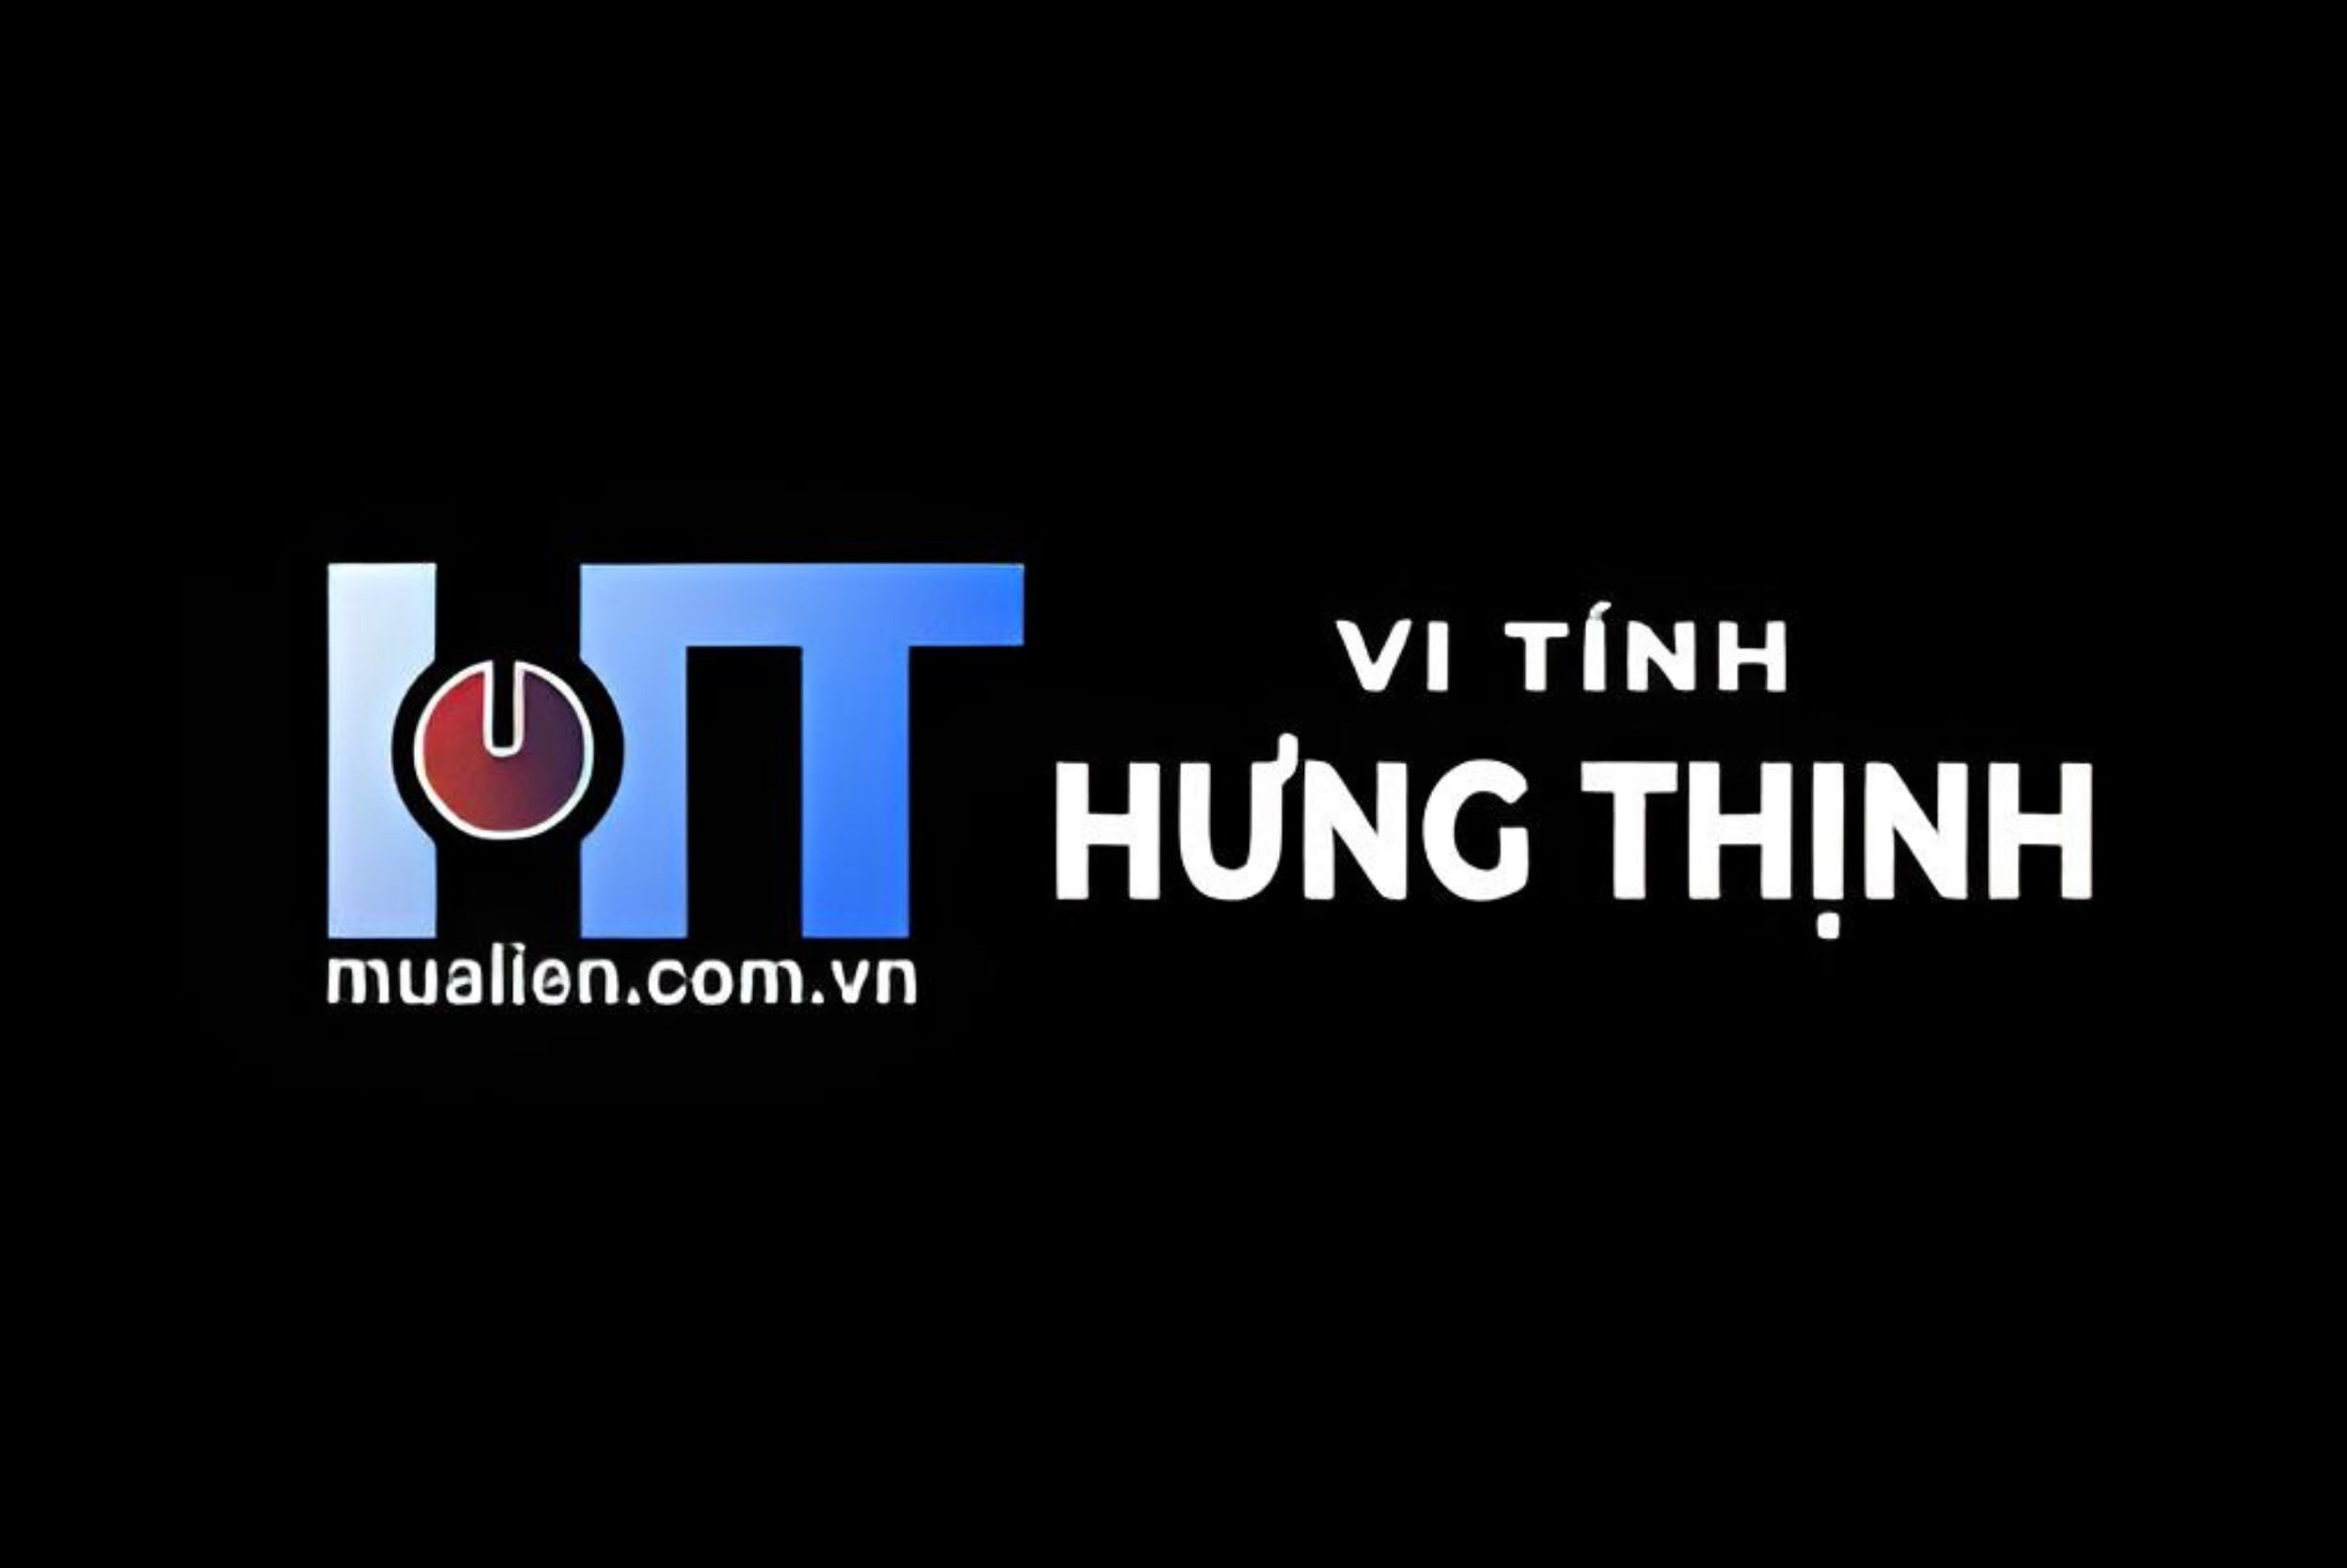 vi-tinh-hung-thinh-logo